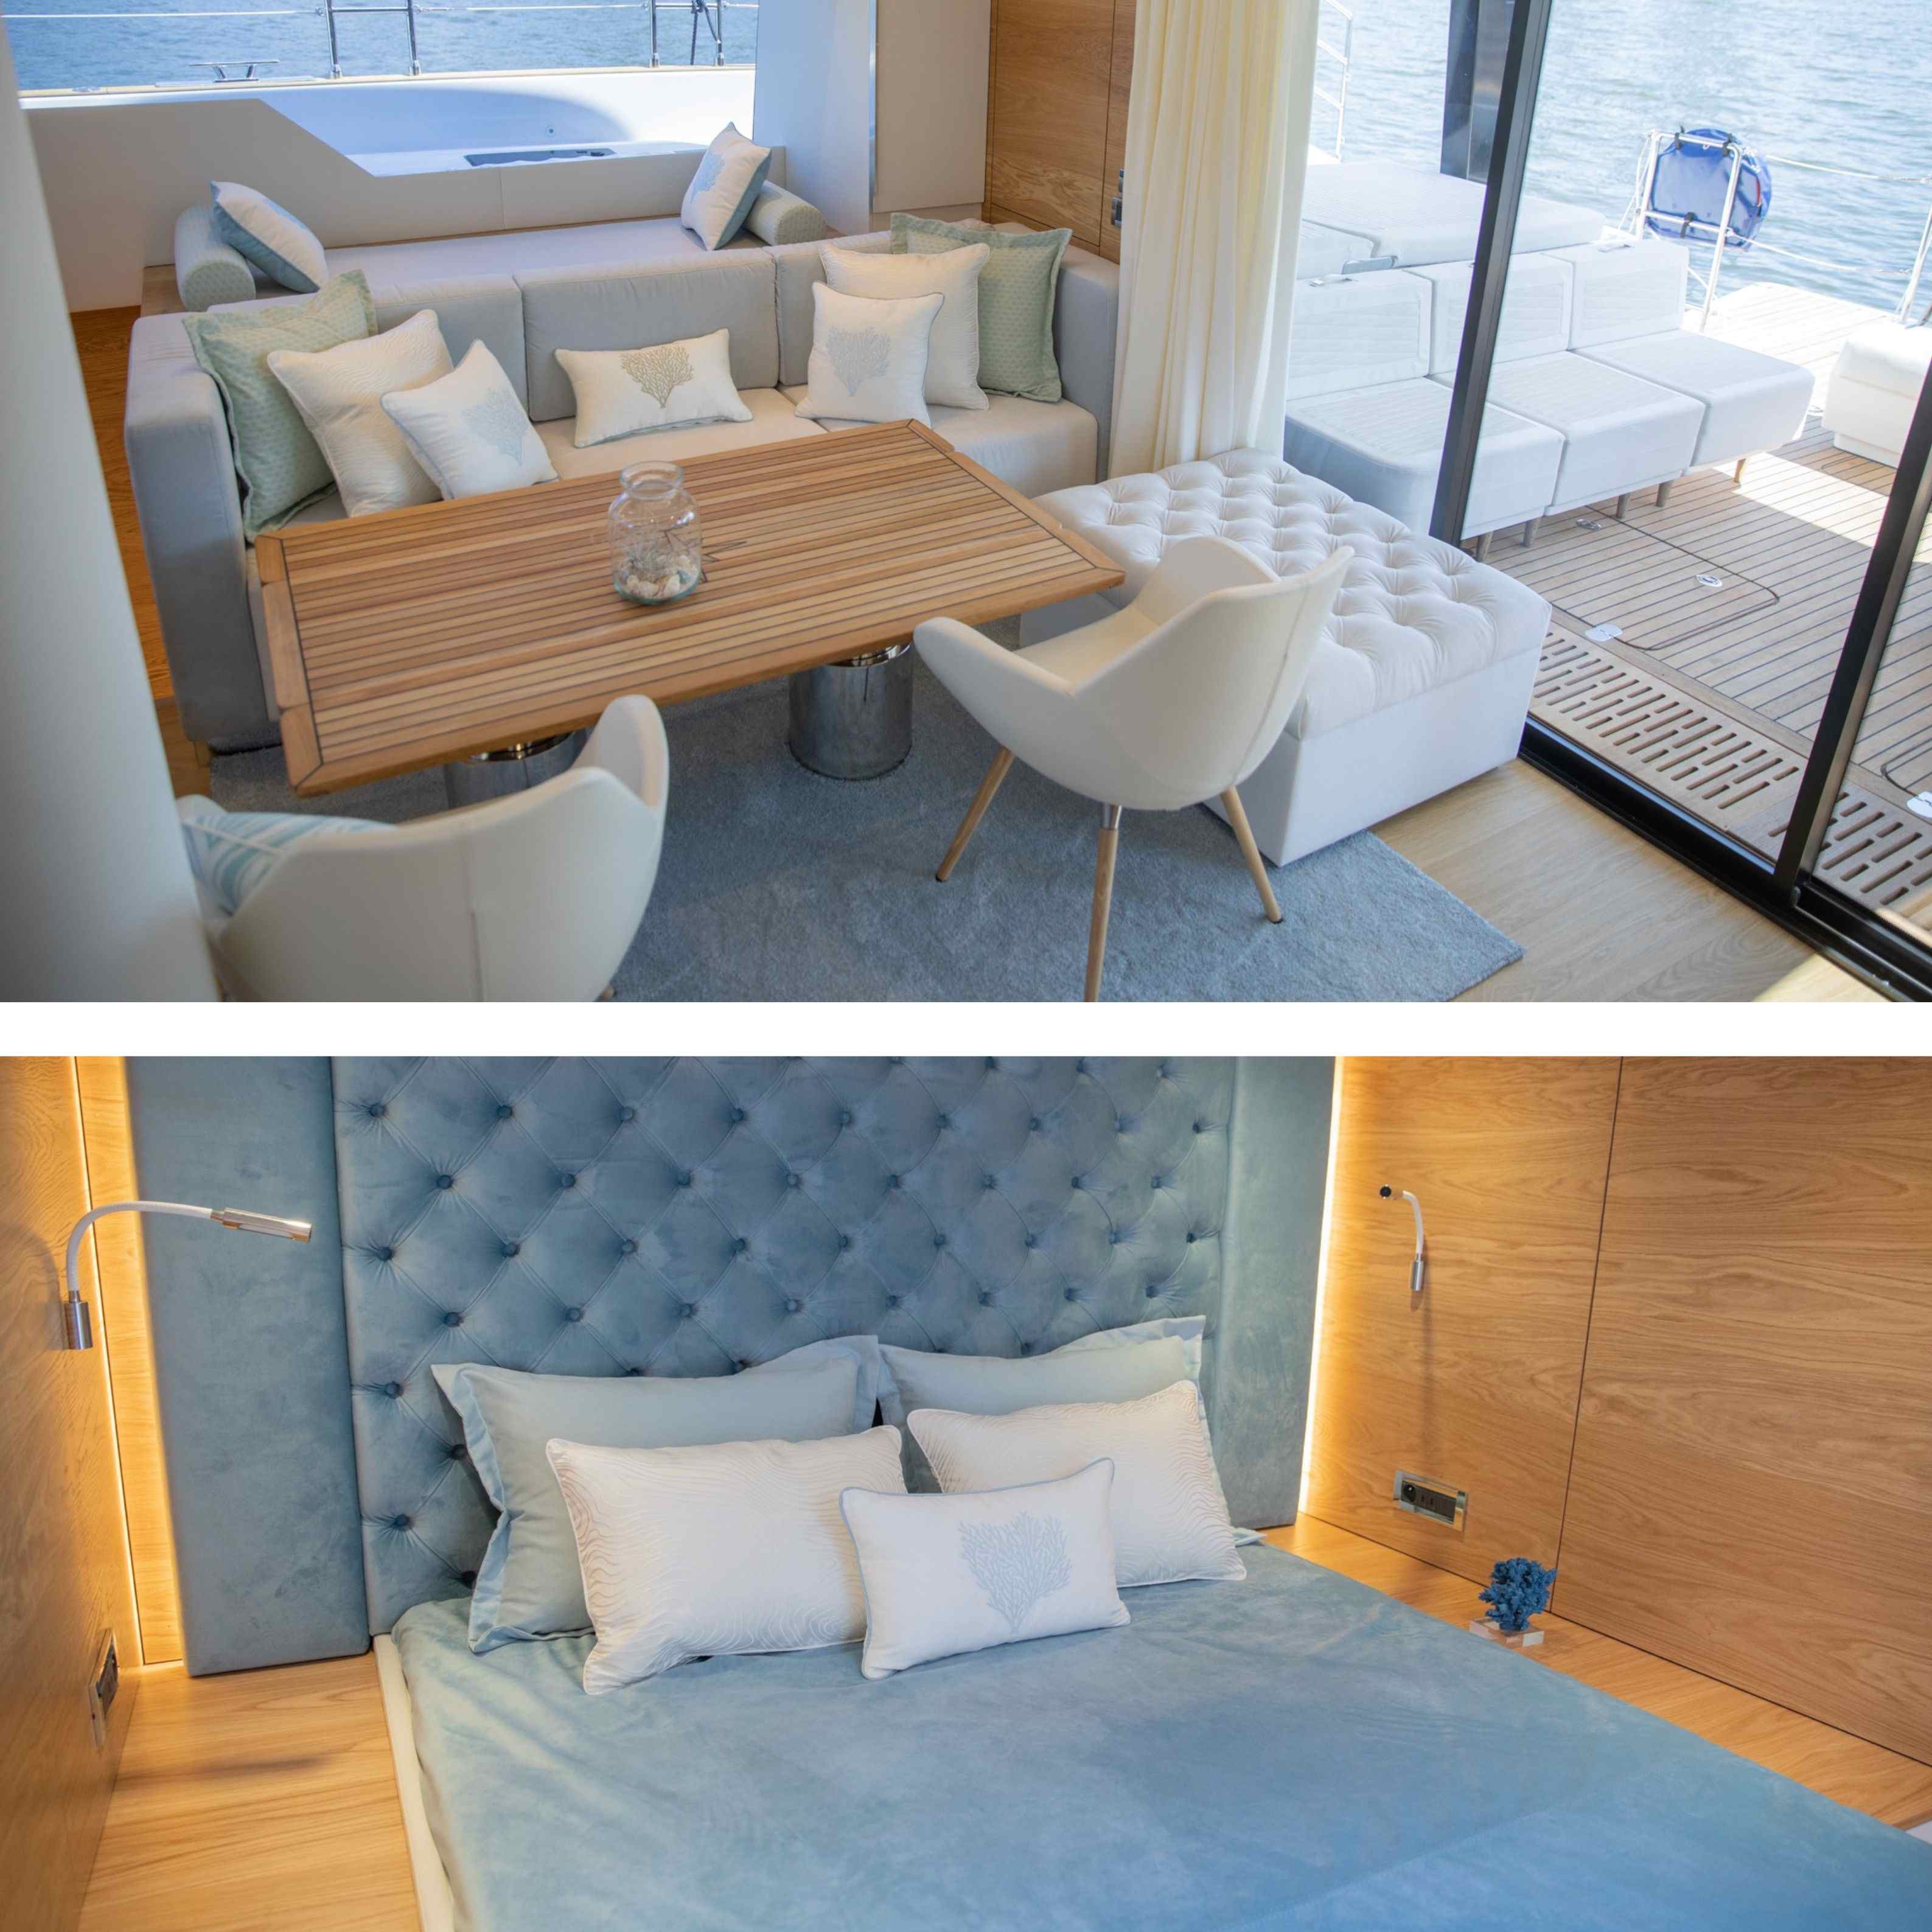 Explore French Polynesia aboard the Catamaran Sunreef Eco 50 TIRIL; an Eco-Responsible Luxury Cruise